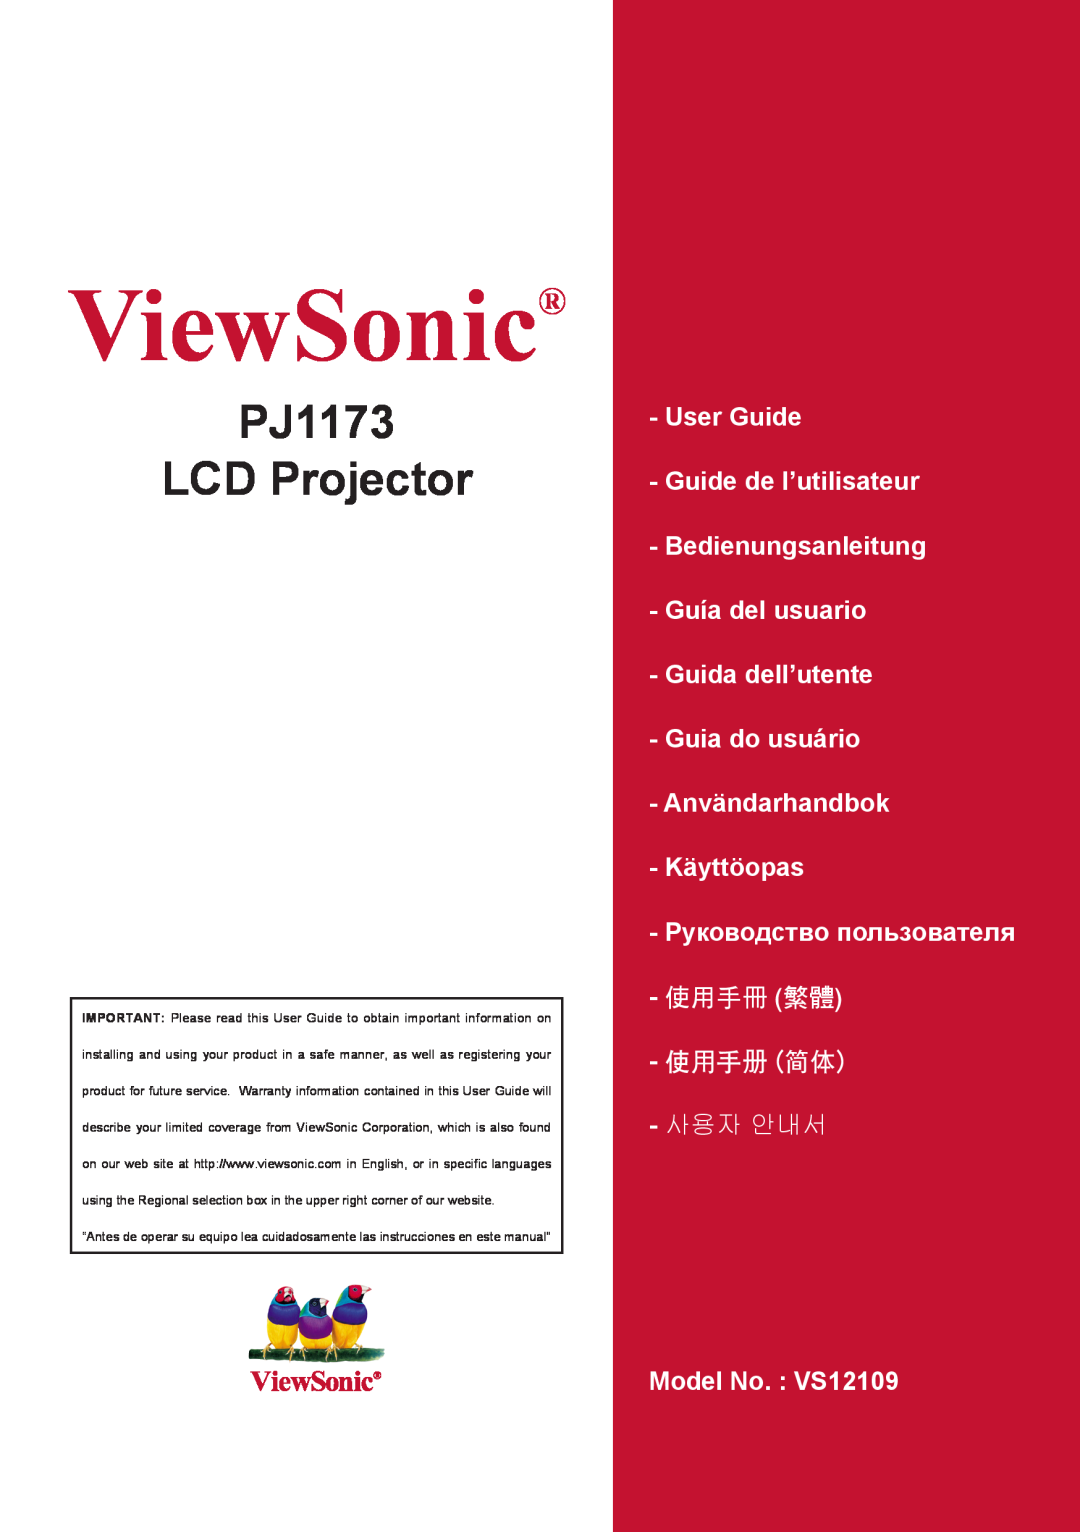 ViewSonic warranty PJ1173 LCD Projector, ViewSonic, User Guide Guide de l’utilisateur, 使用手冊 繁體 使用手冊 簡體, 사용자 안내서 